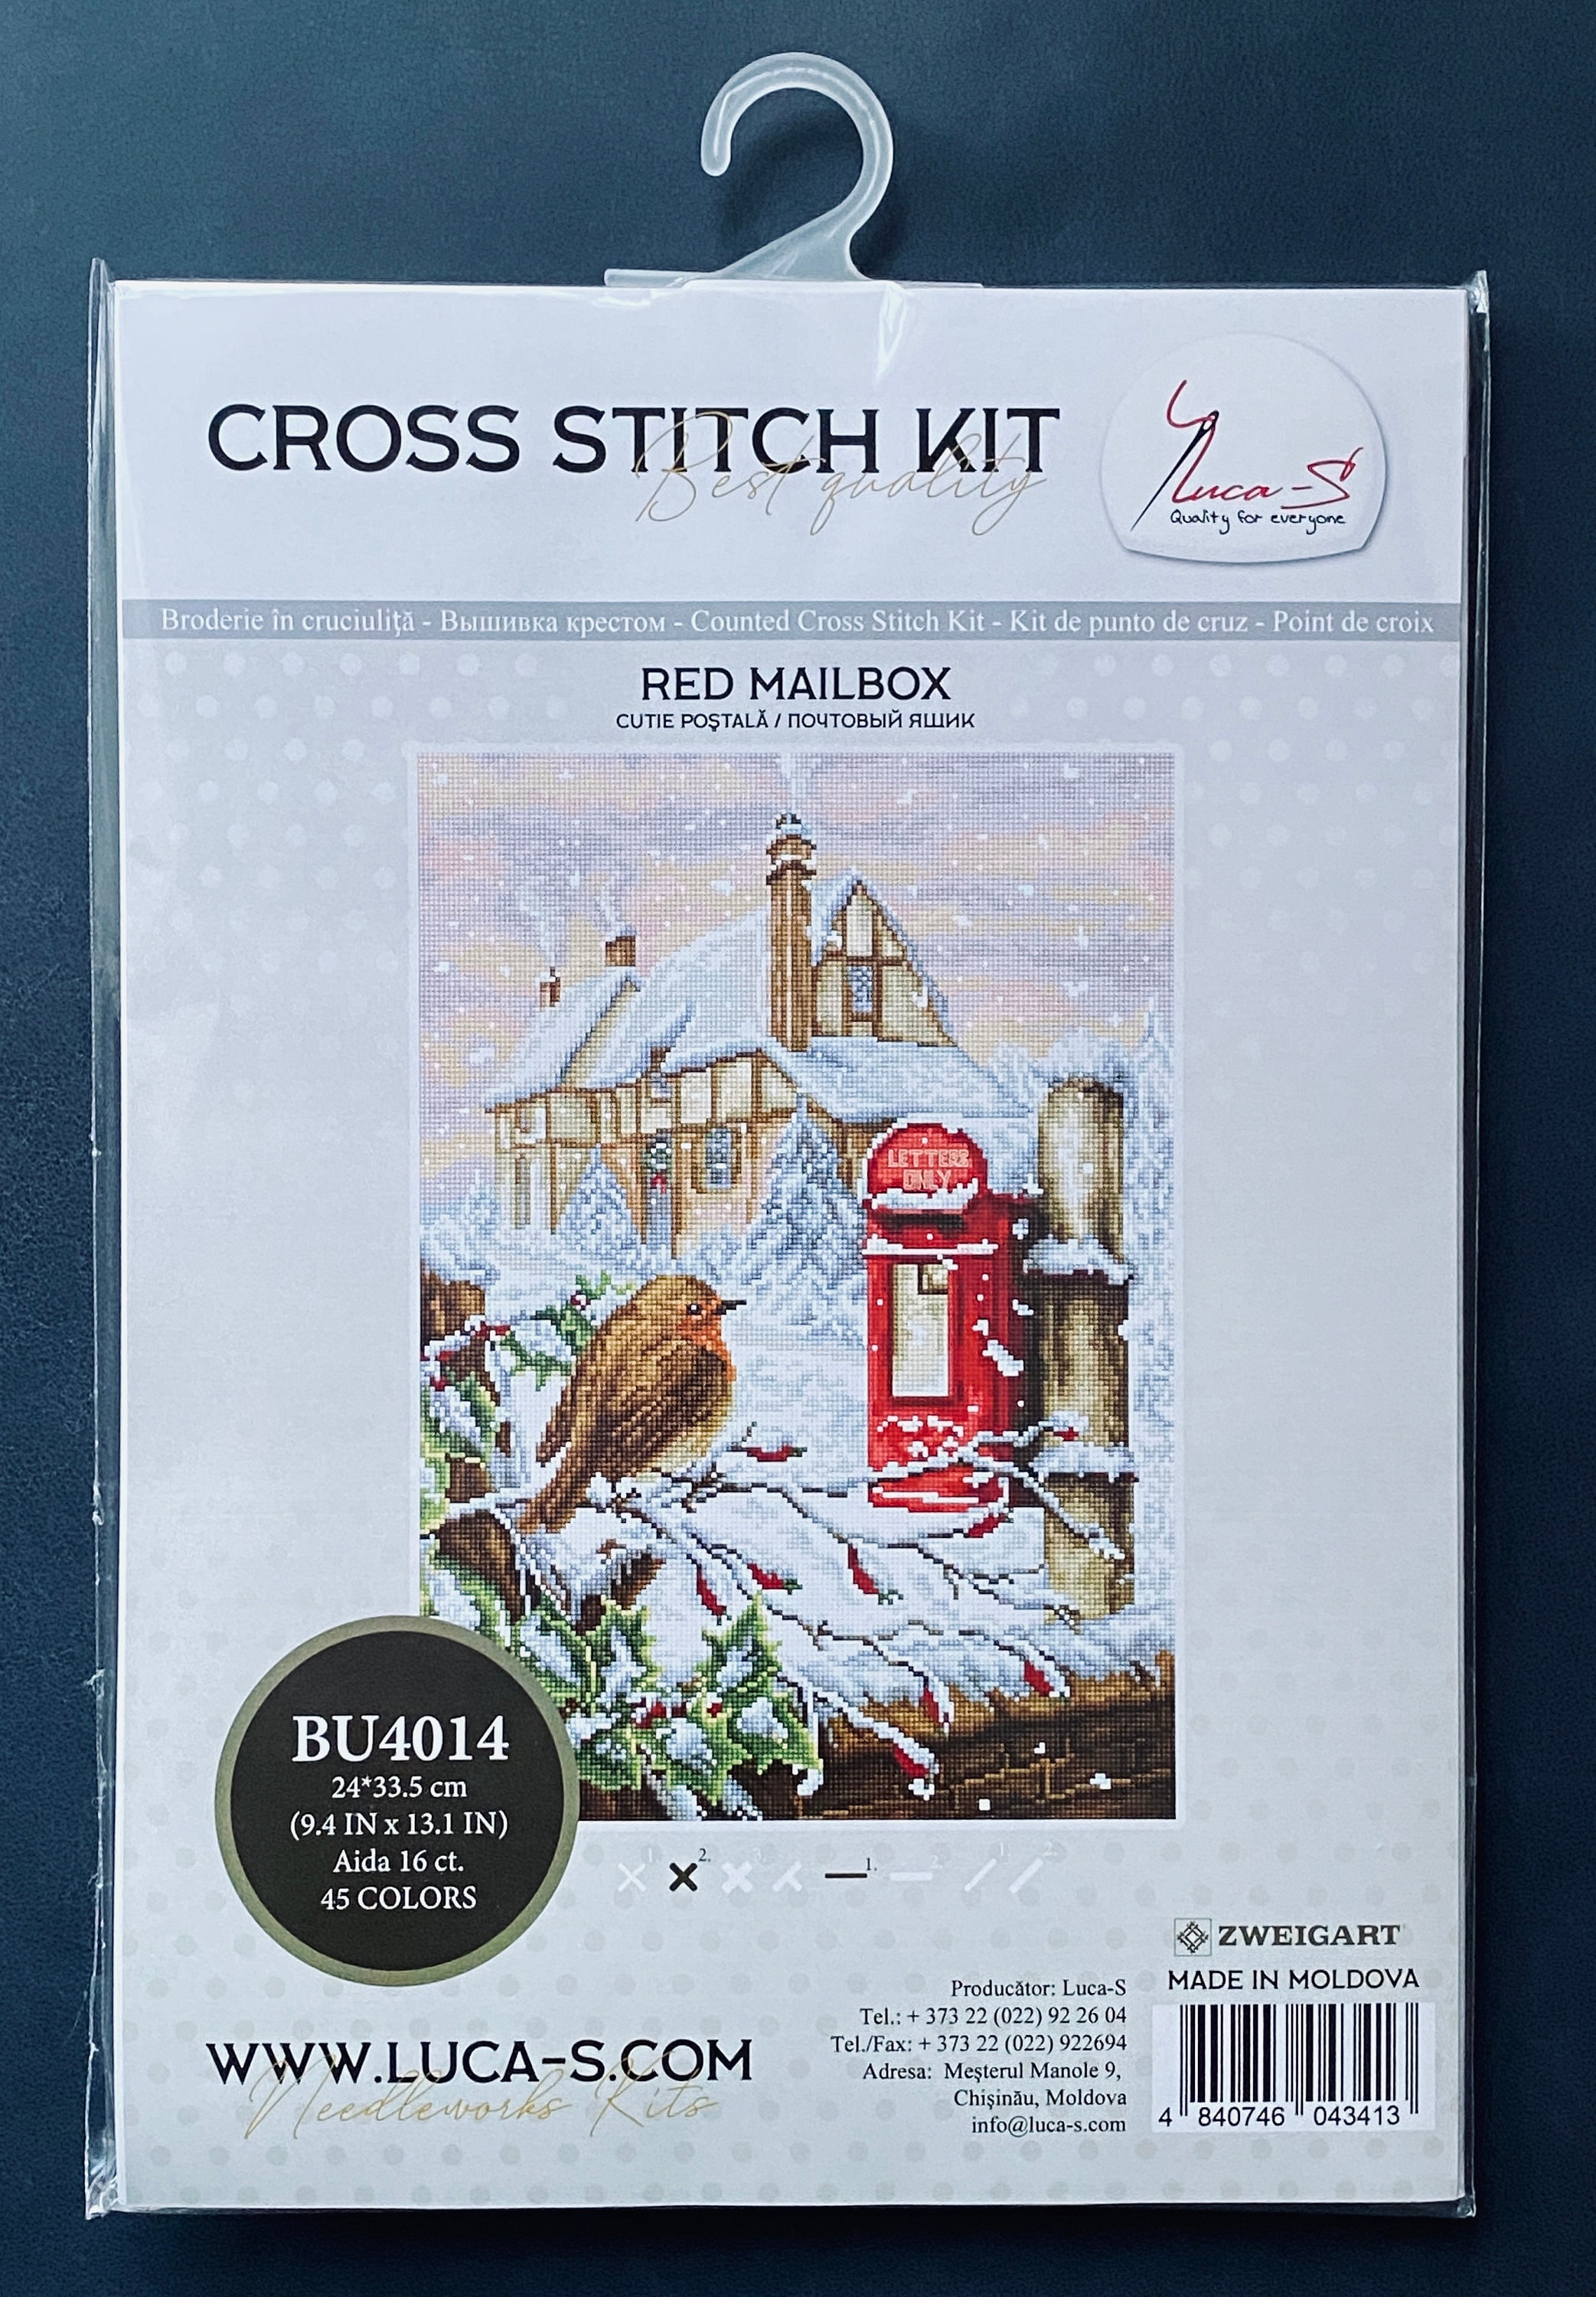 Cross Stitch Kit Kids Luca-s, Cross Stitch Kits for Beginners 